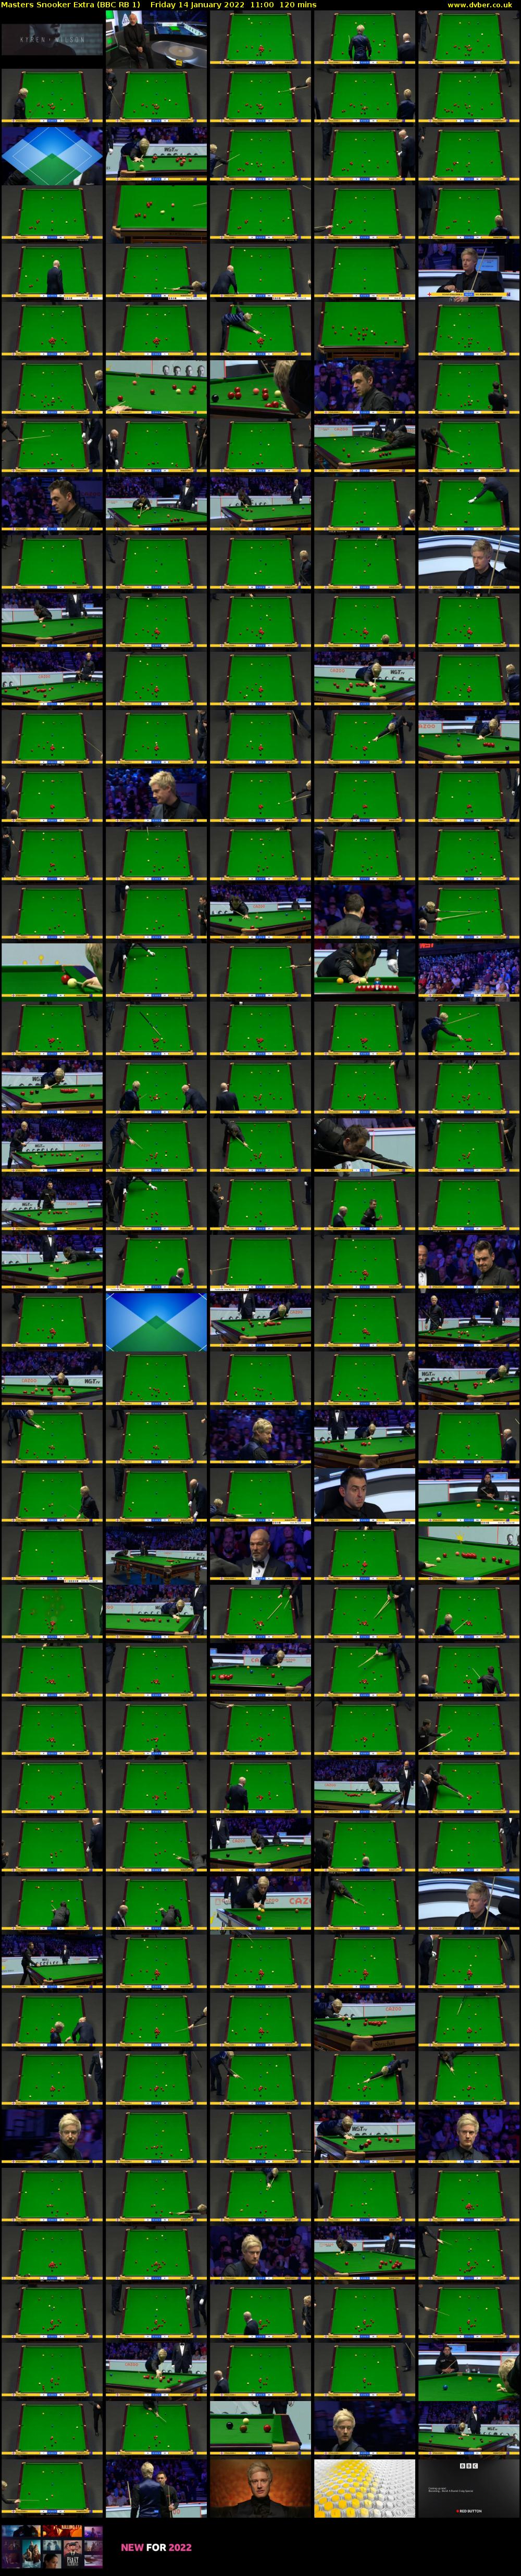 Masters Snooker Extra (BBC RB 1) Friday 14 January 2022 11:00 - 13:00